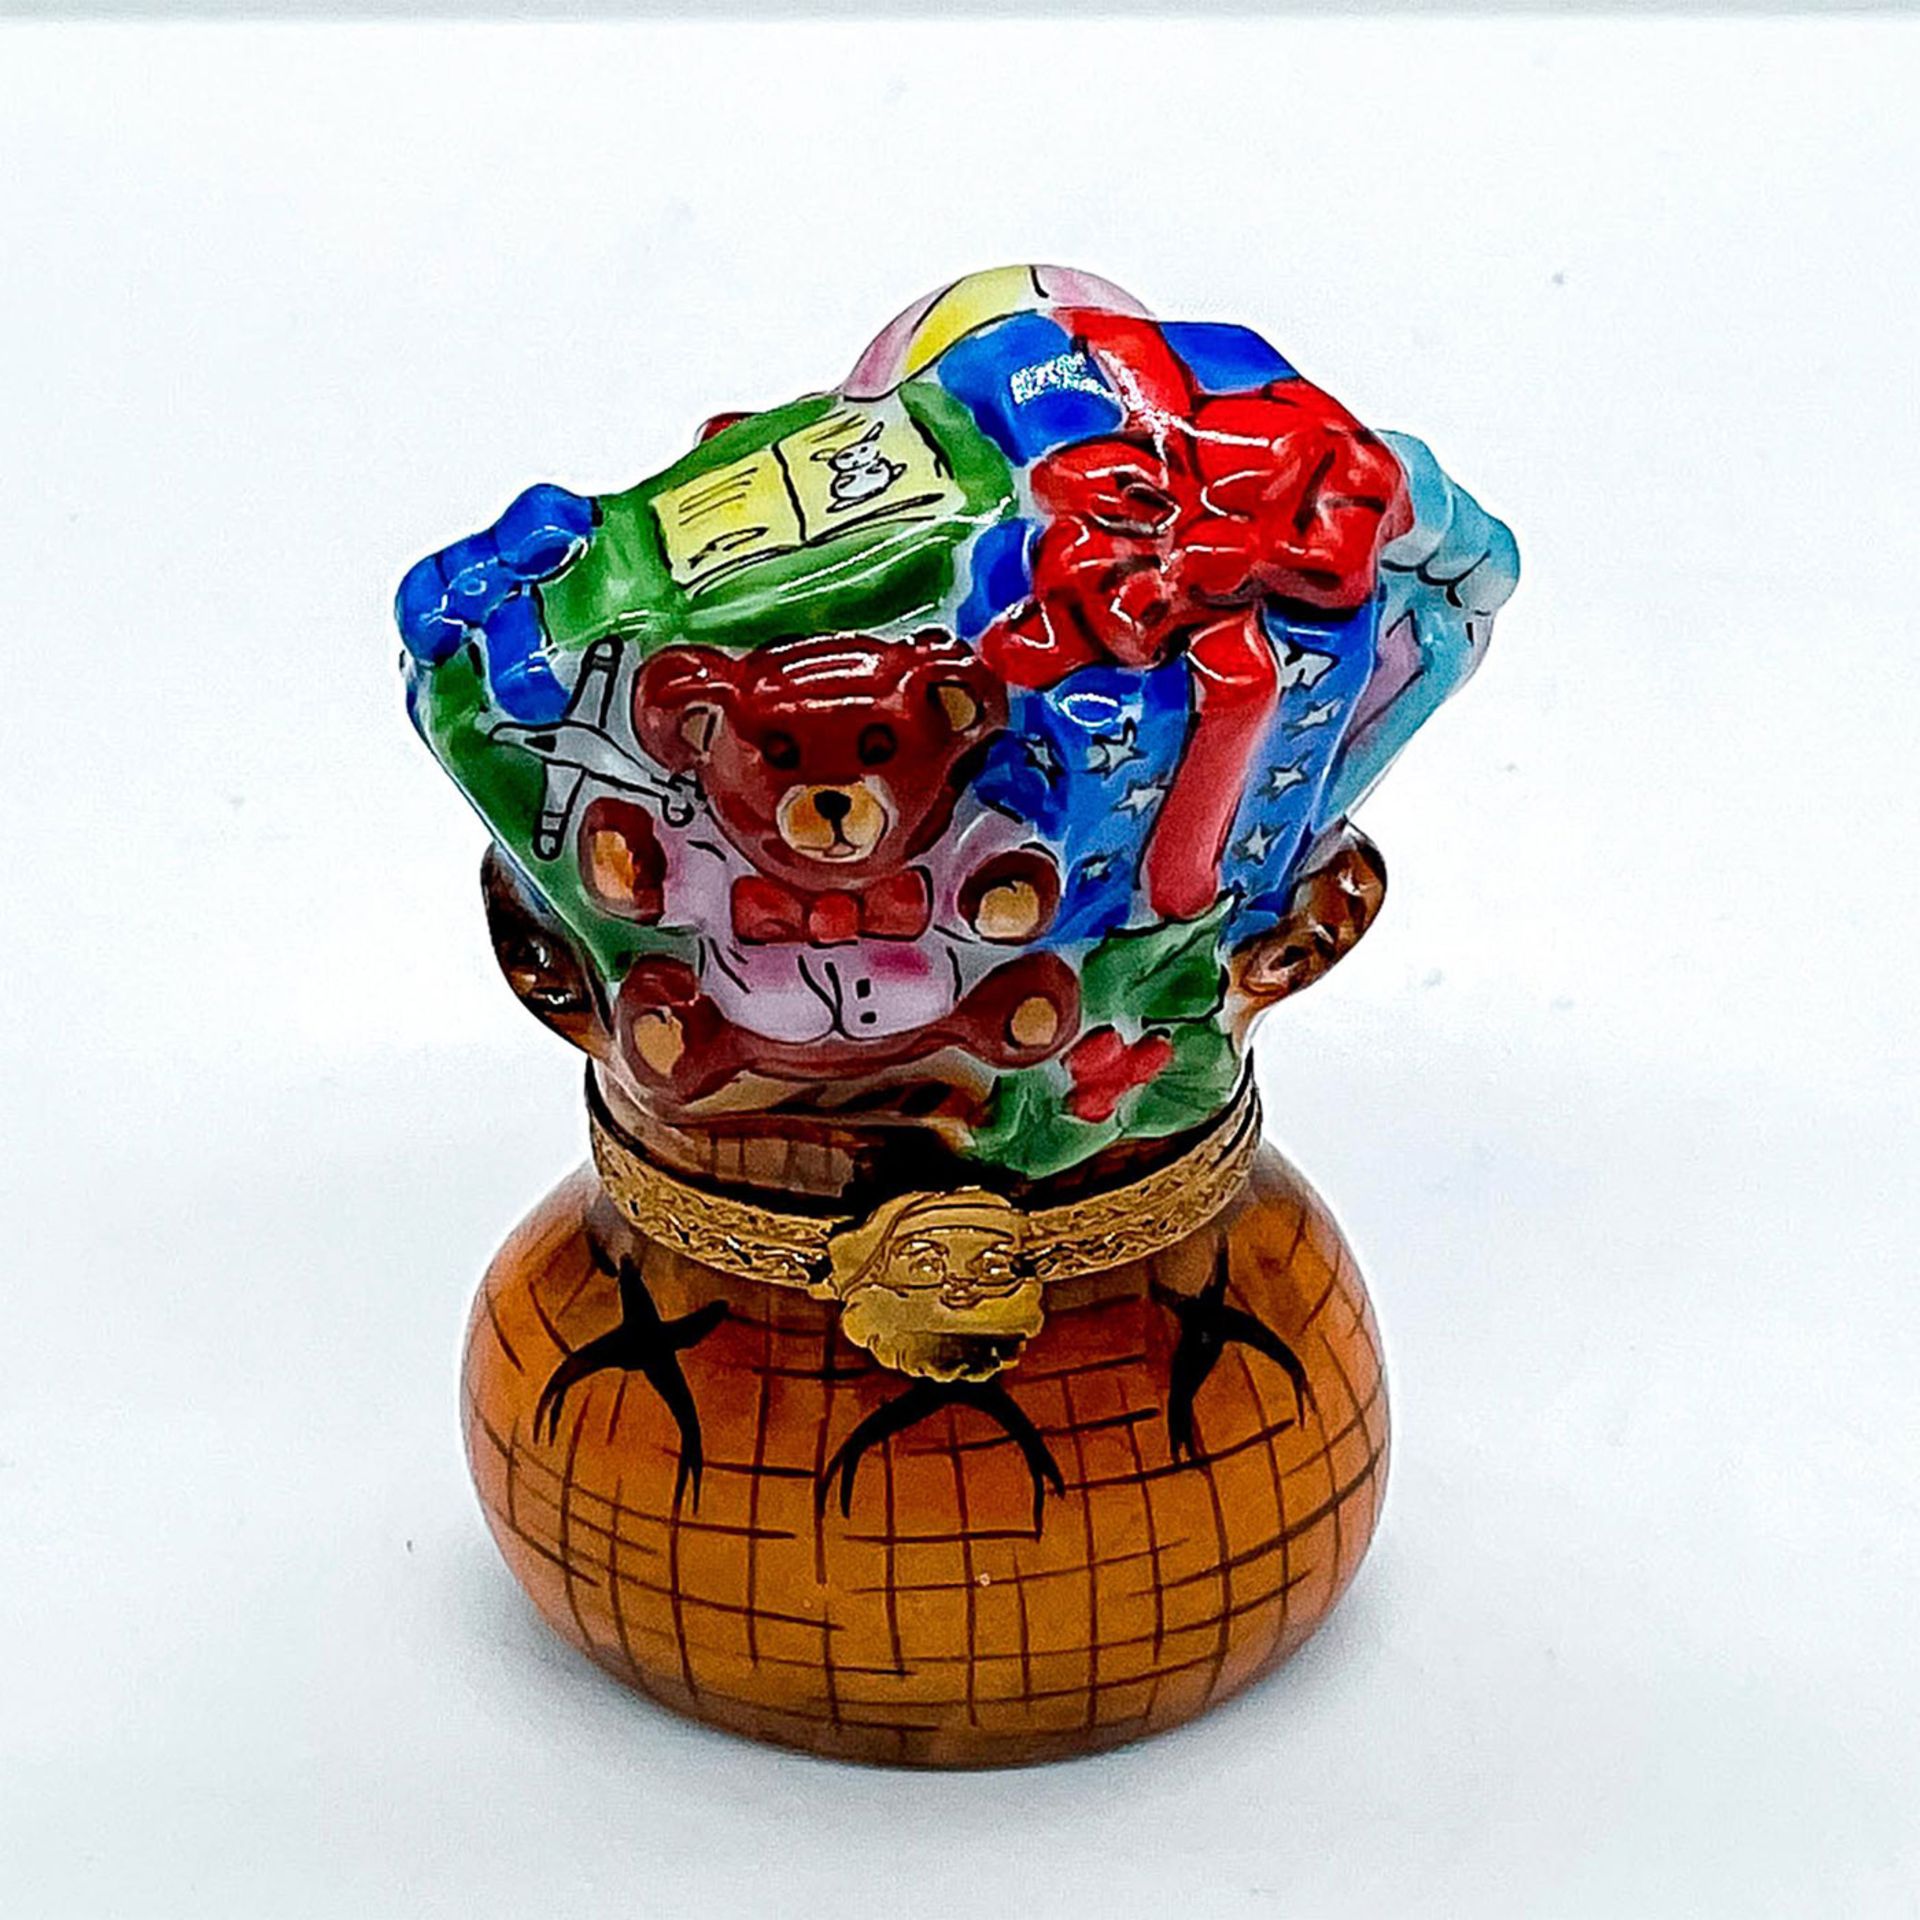 Dubarry Limoges Porcelain Charm Box, Basket of Gifts